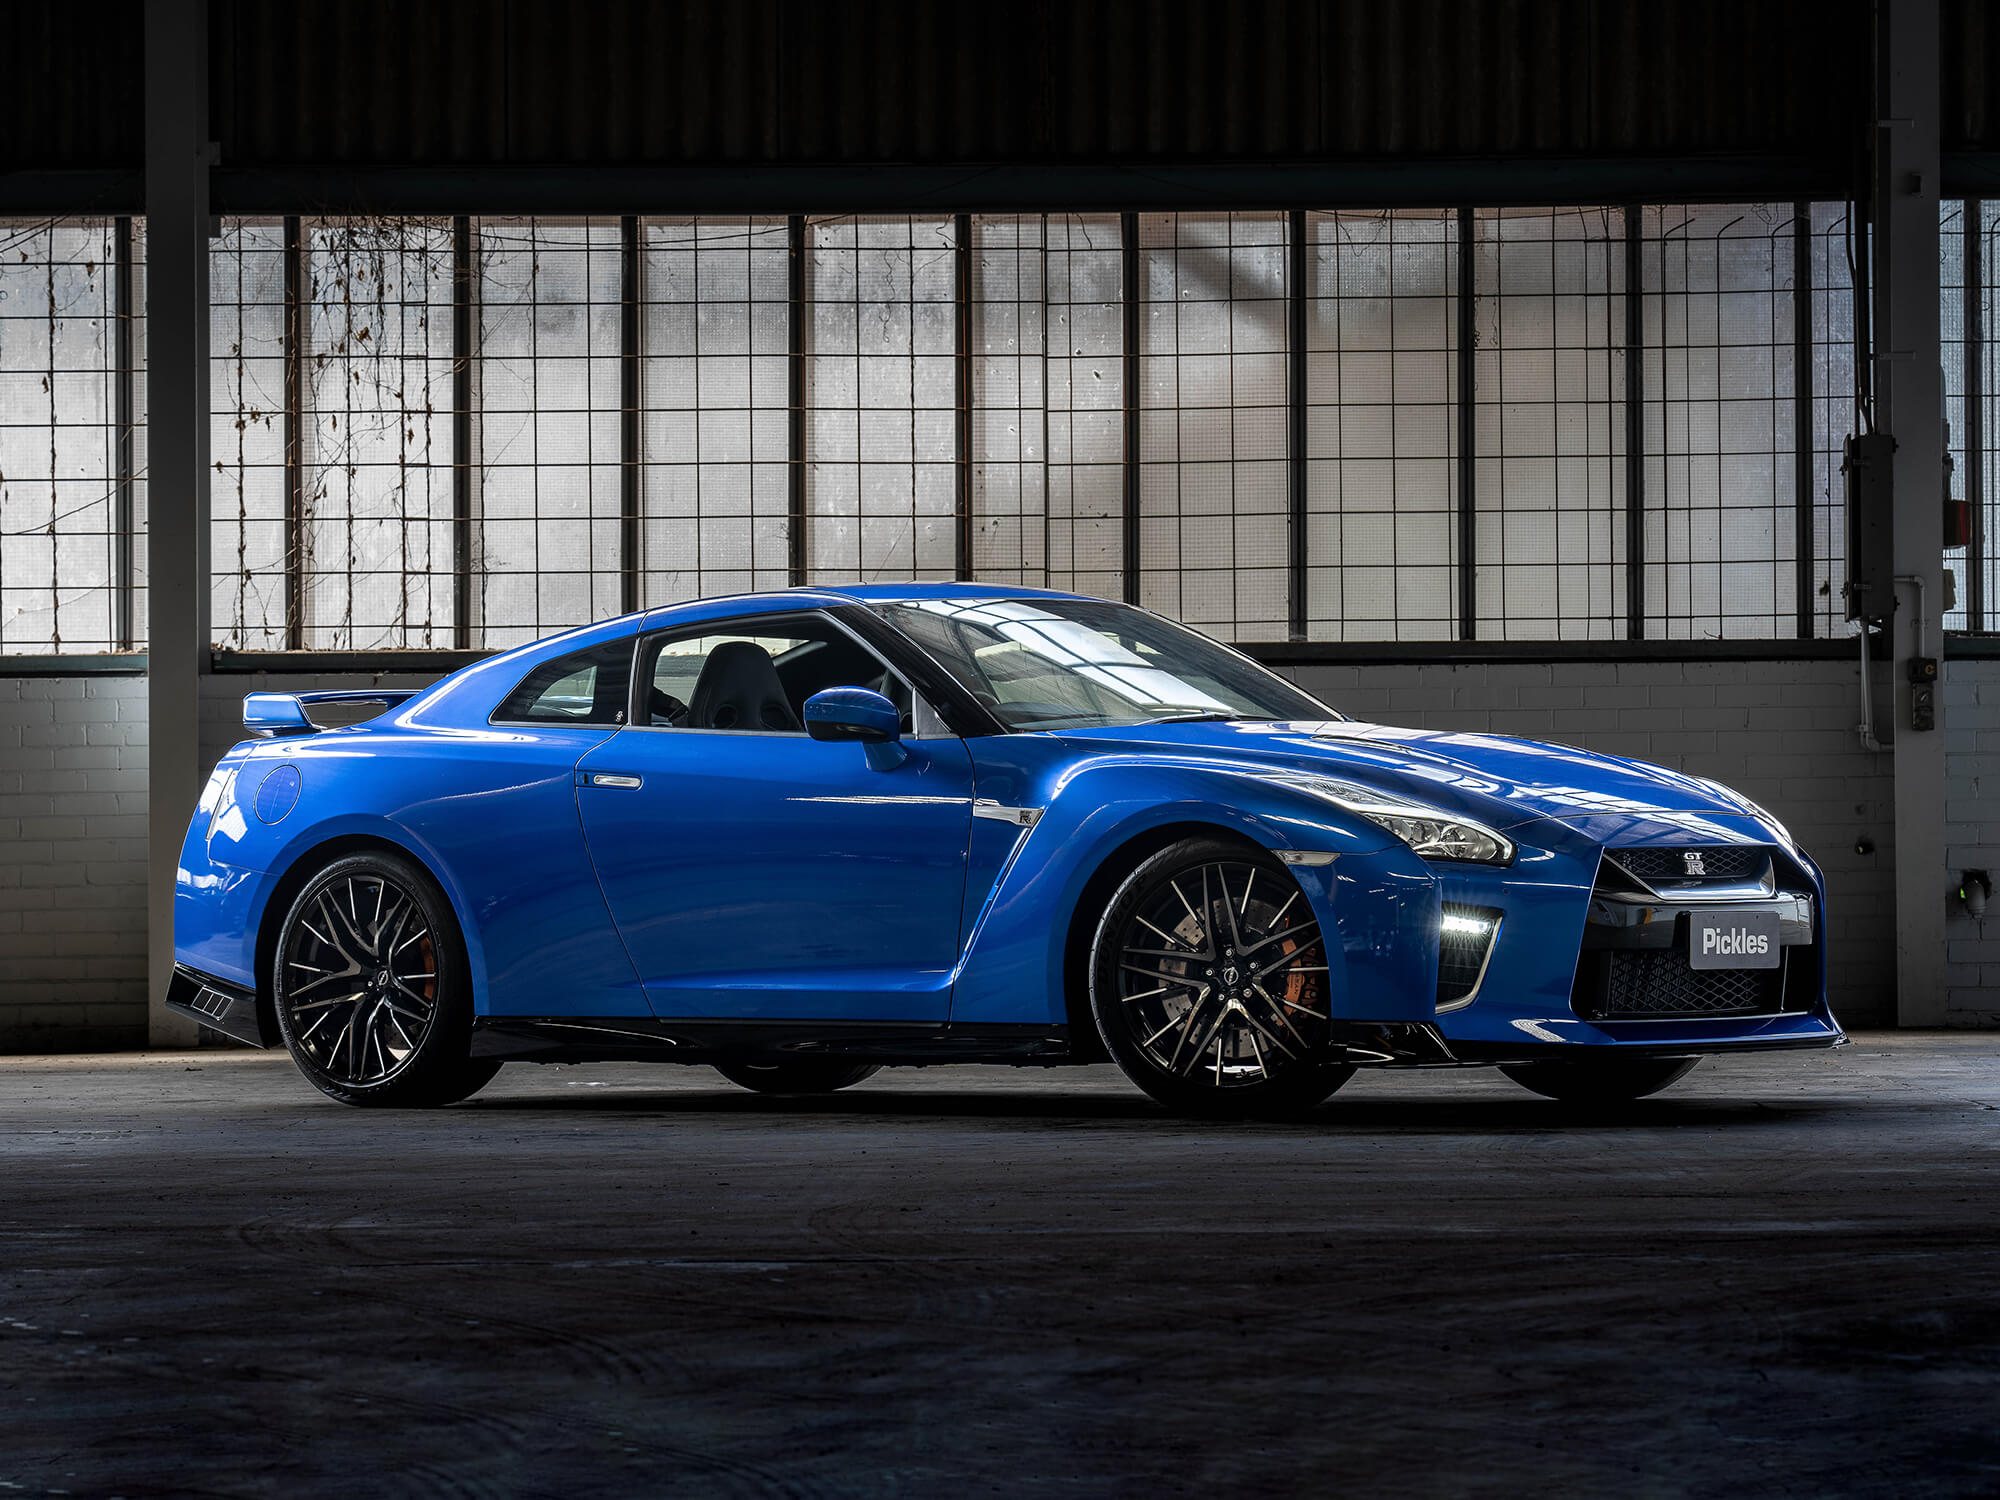 View a blue 2021 Nissan GTR R35 available via auction.